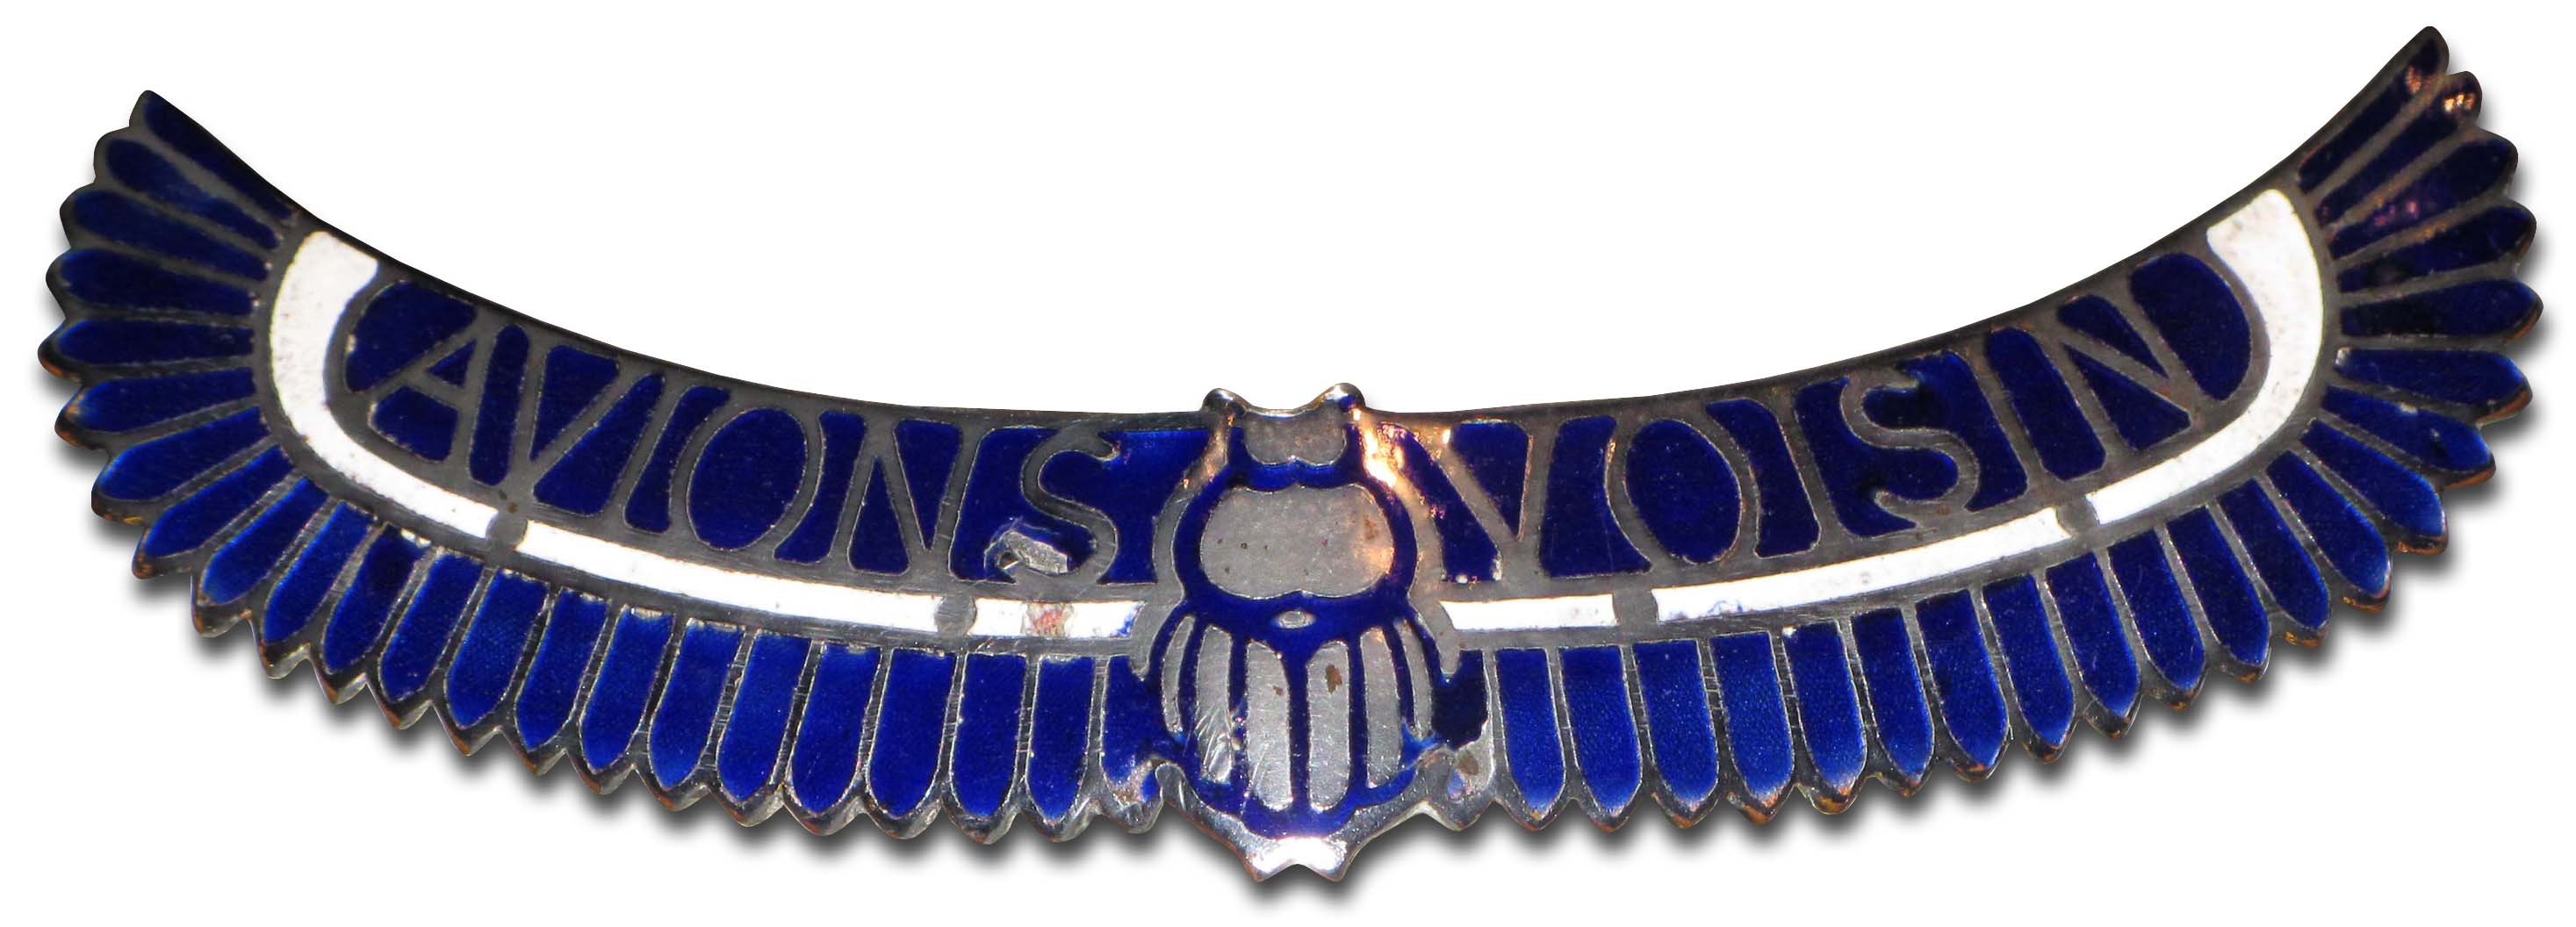 1919. Avions Voisin Type MI (grill emblem)